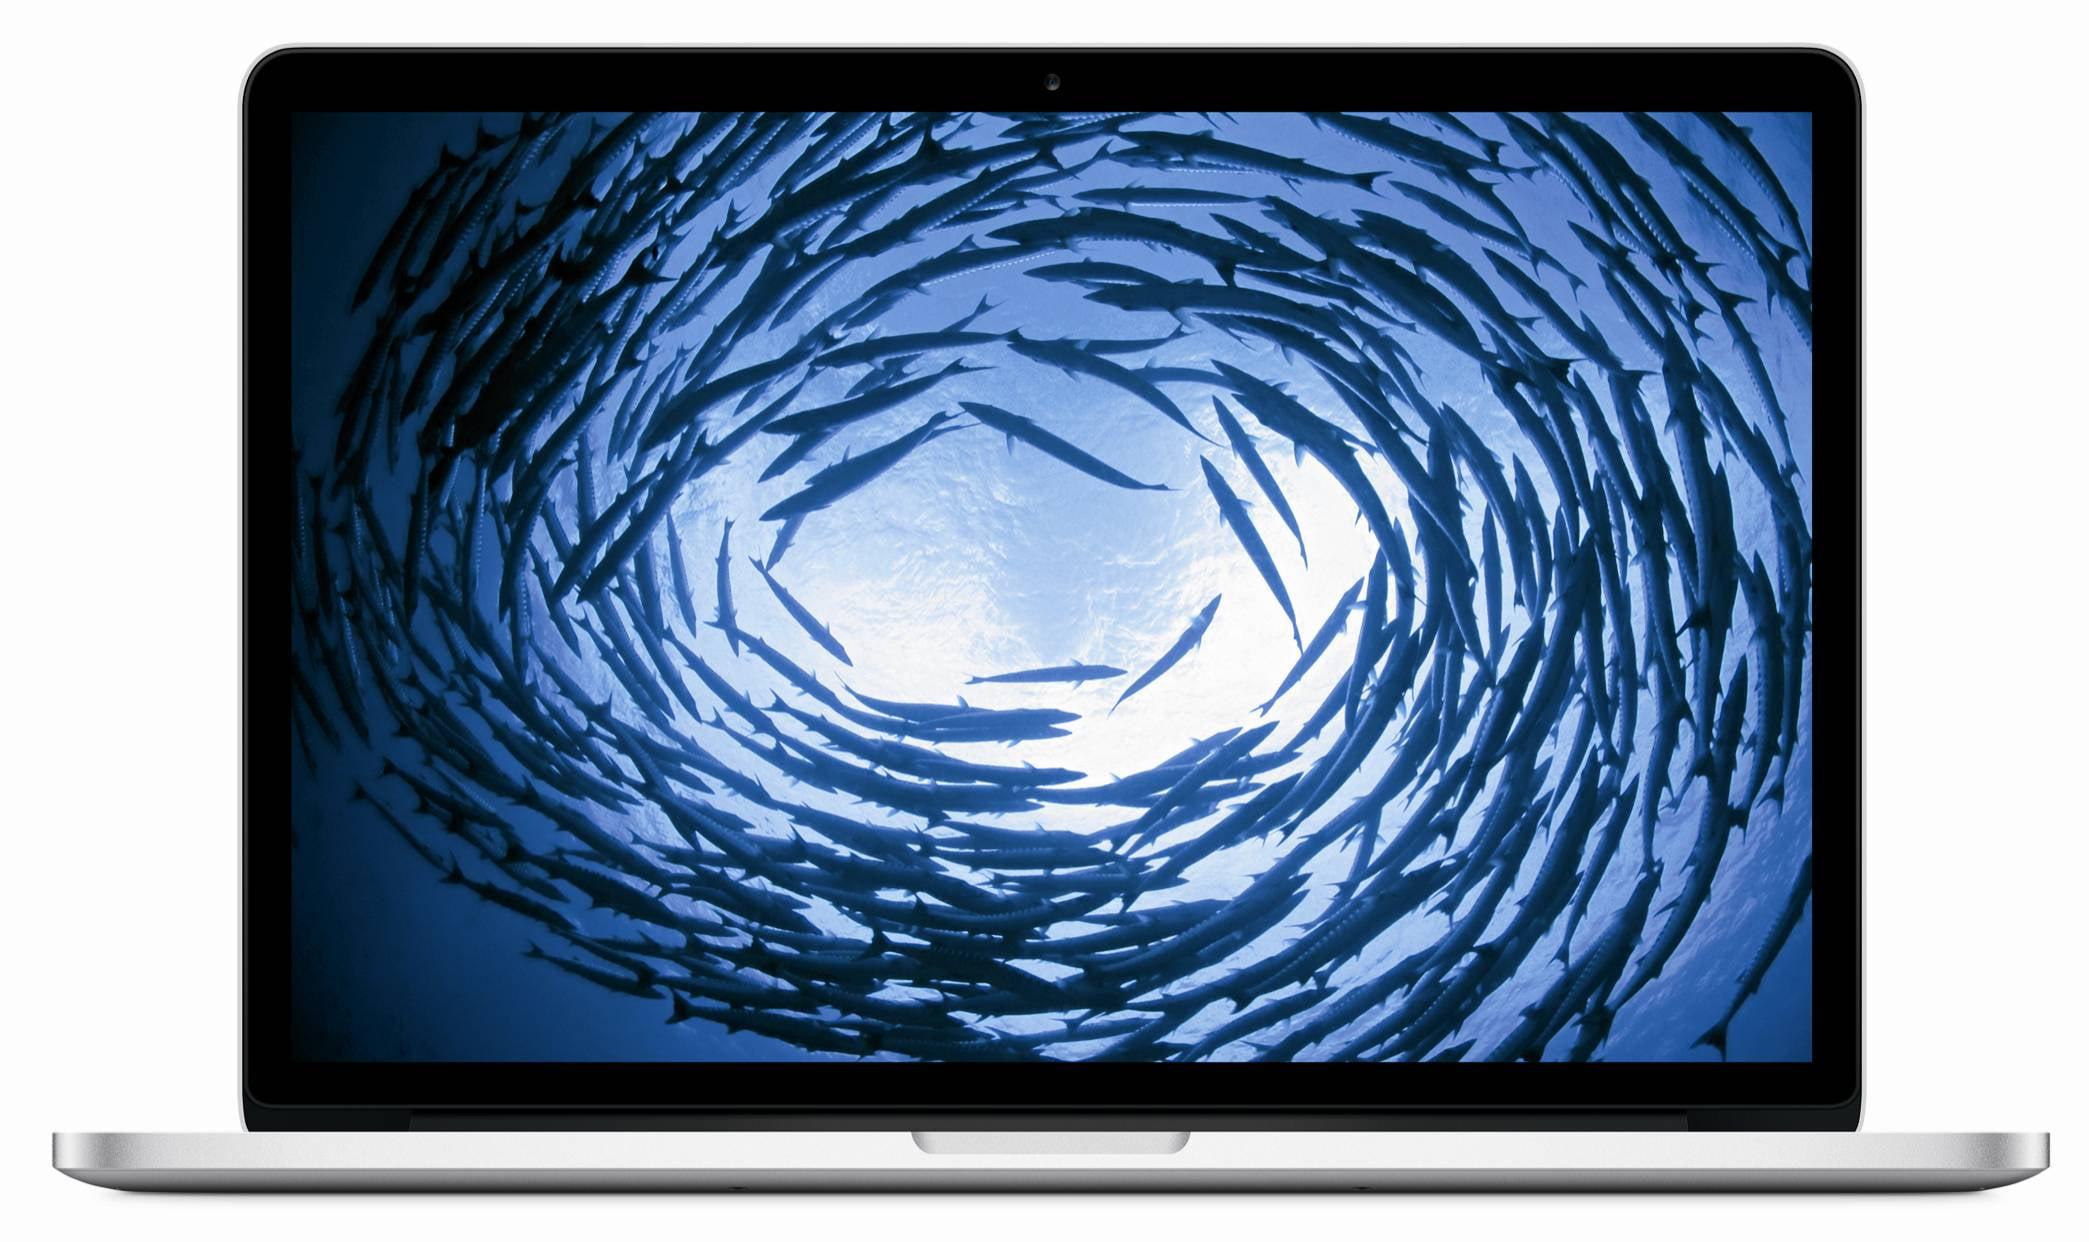 Apple A Grade Macbook Pro 15 4 Inch Retina Dg 2 8ghz Quad Core I7 Mid 15 Mjlu2ll A 512gb Ssd 16 Gb Memory x1800 Display Mac Os X V10 12 Sierra Power Adapter Included Walmart Com